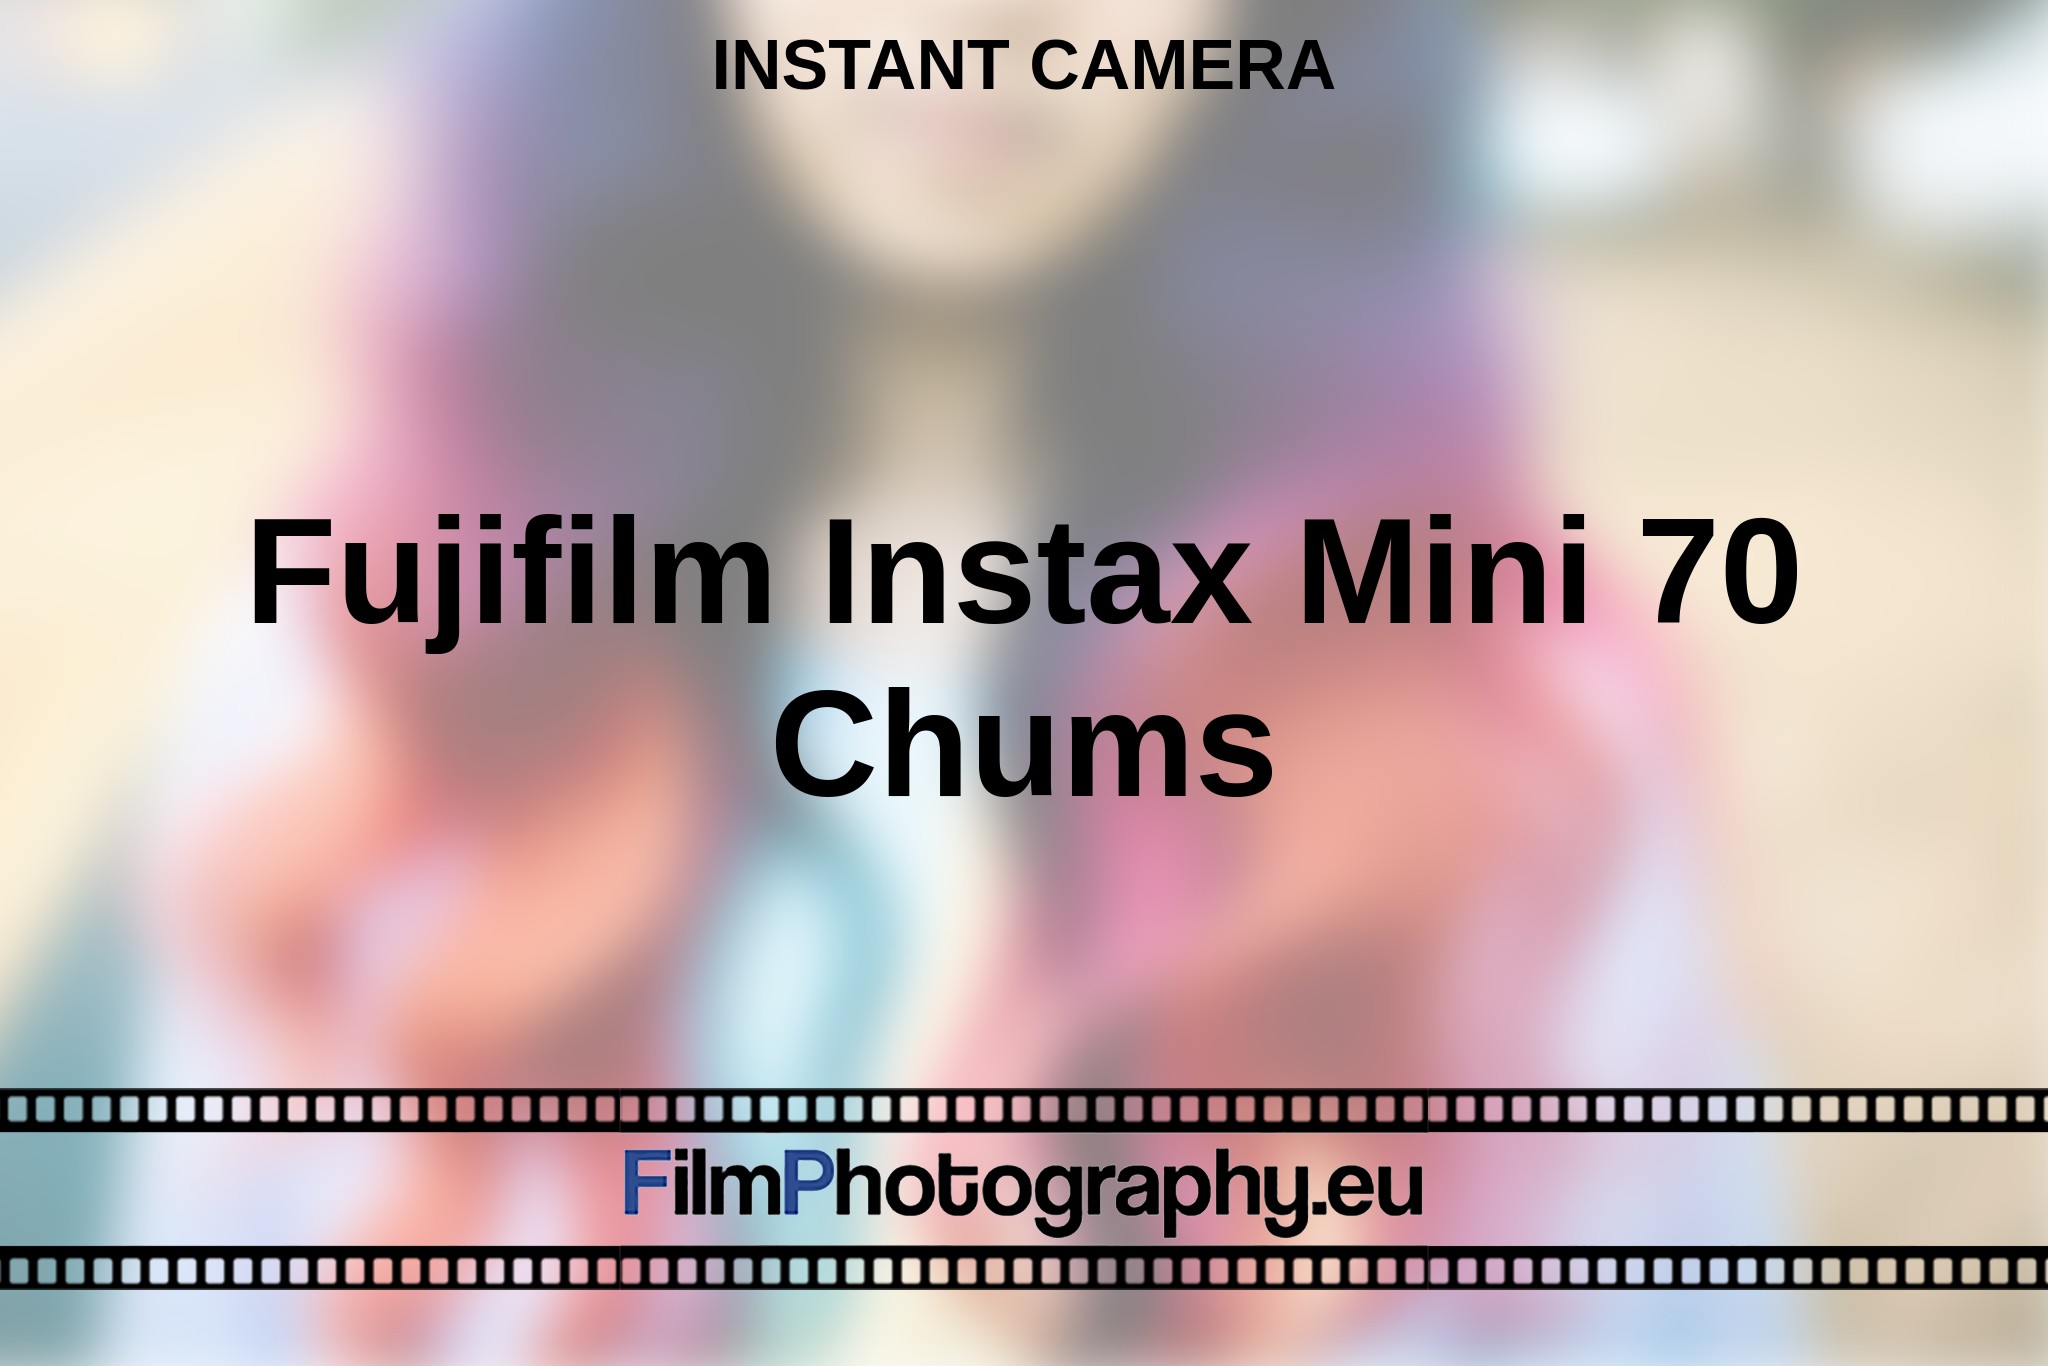 fujifilm-instax-mini-70-chums-instant-camera-bnv.jpg